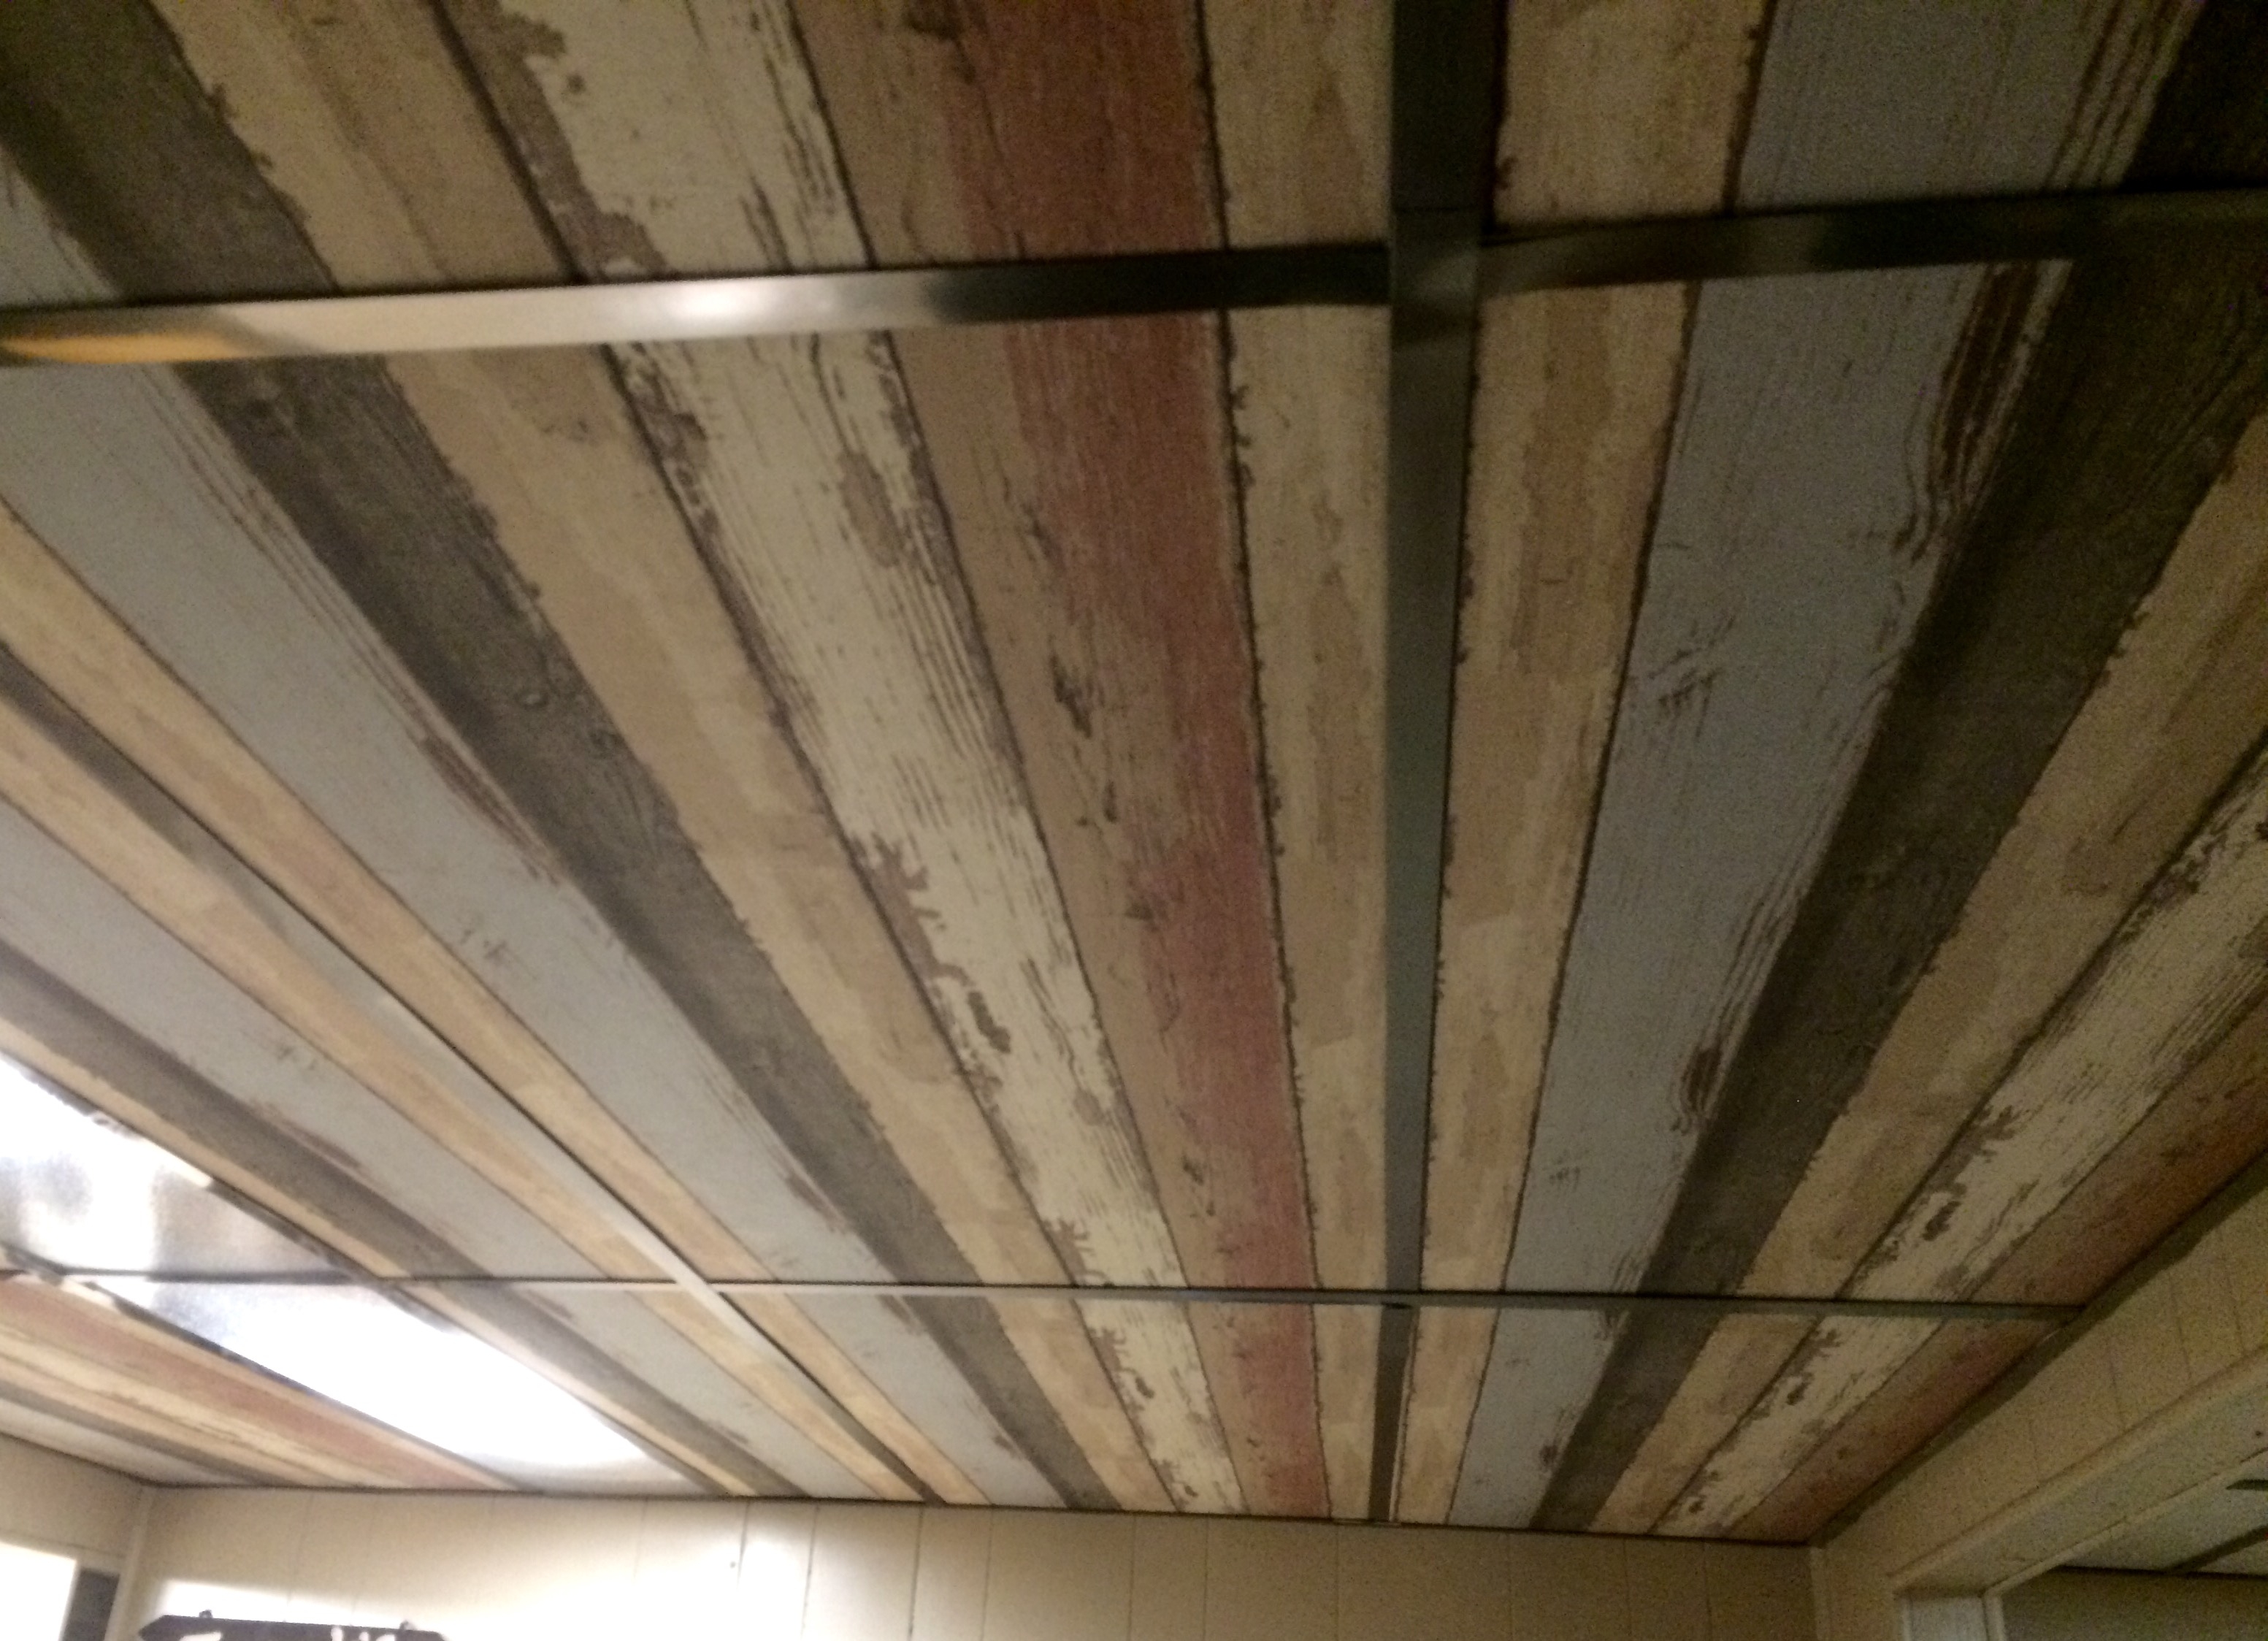 Wallpaper Acoustic Ceiling Tilesdropped ceiling i wallpapered the old ceiling tiles i covered